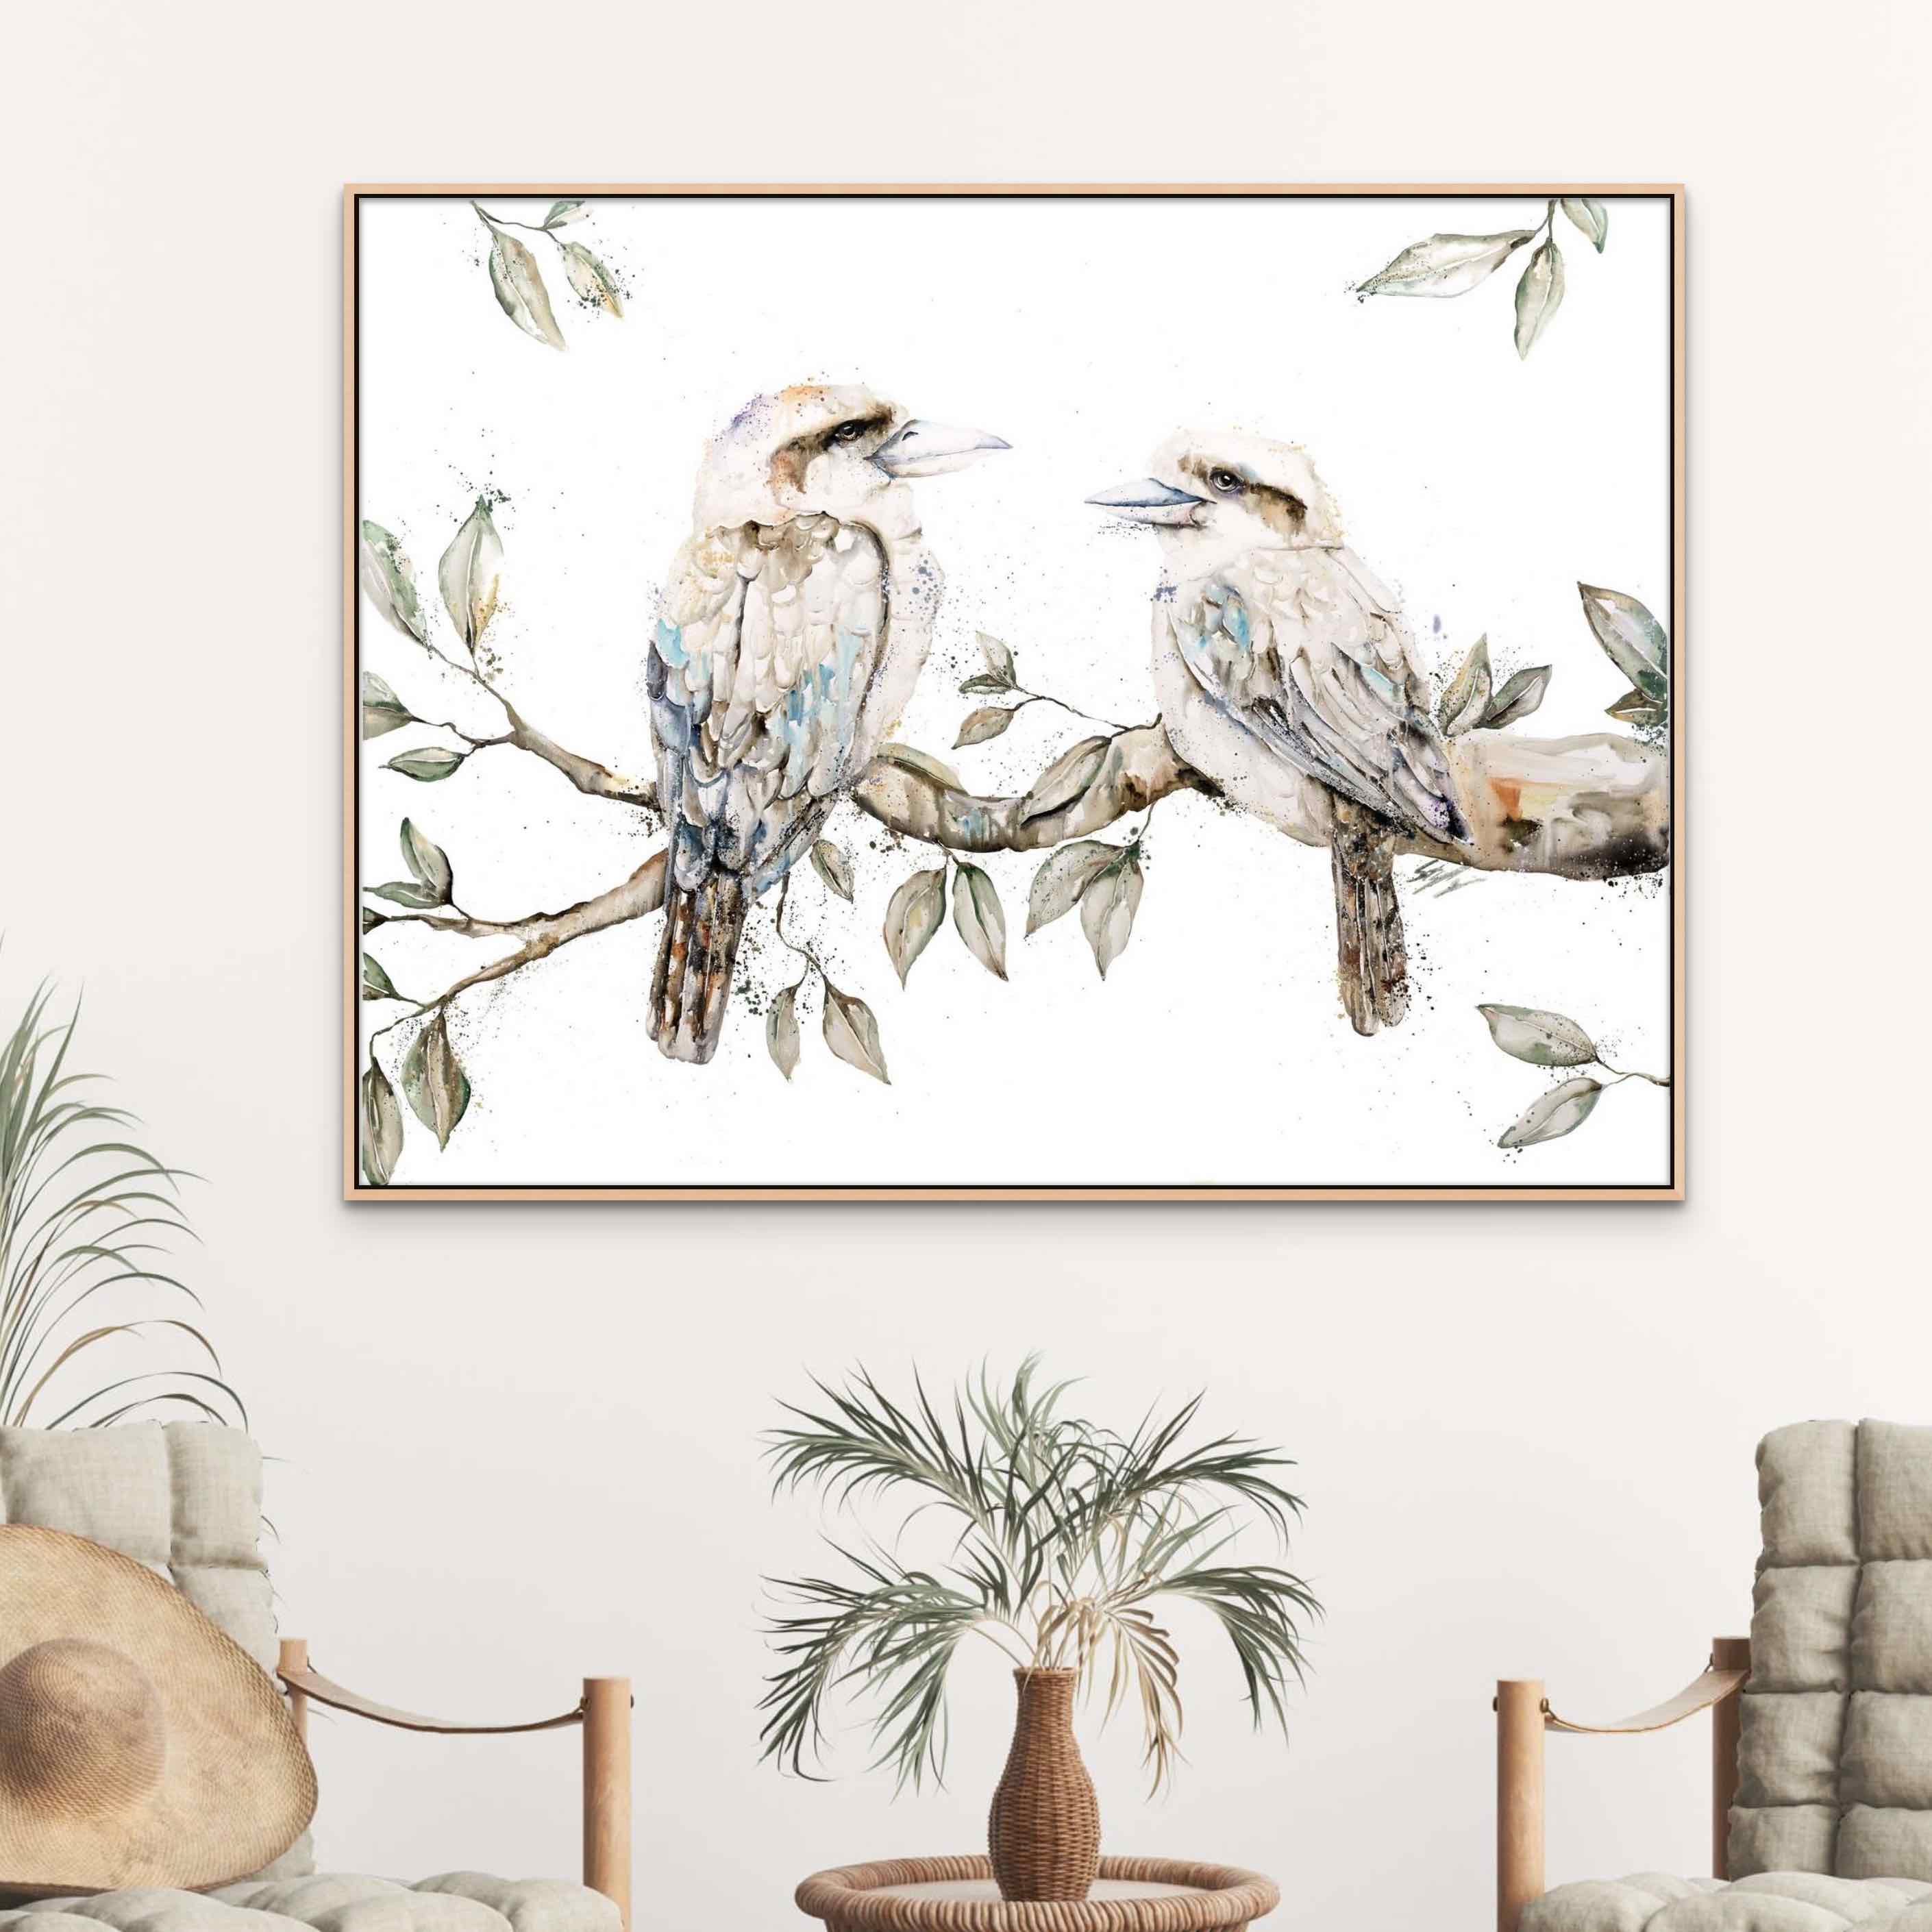 branching-out-kooka burra-canvas-print-framed-in-oak-stephanie-elizabeth-artwork